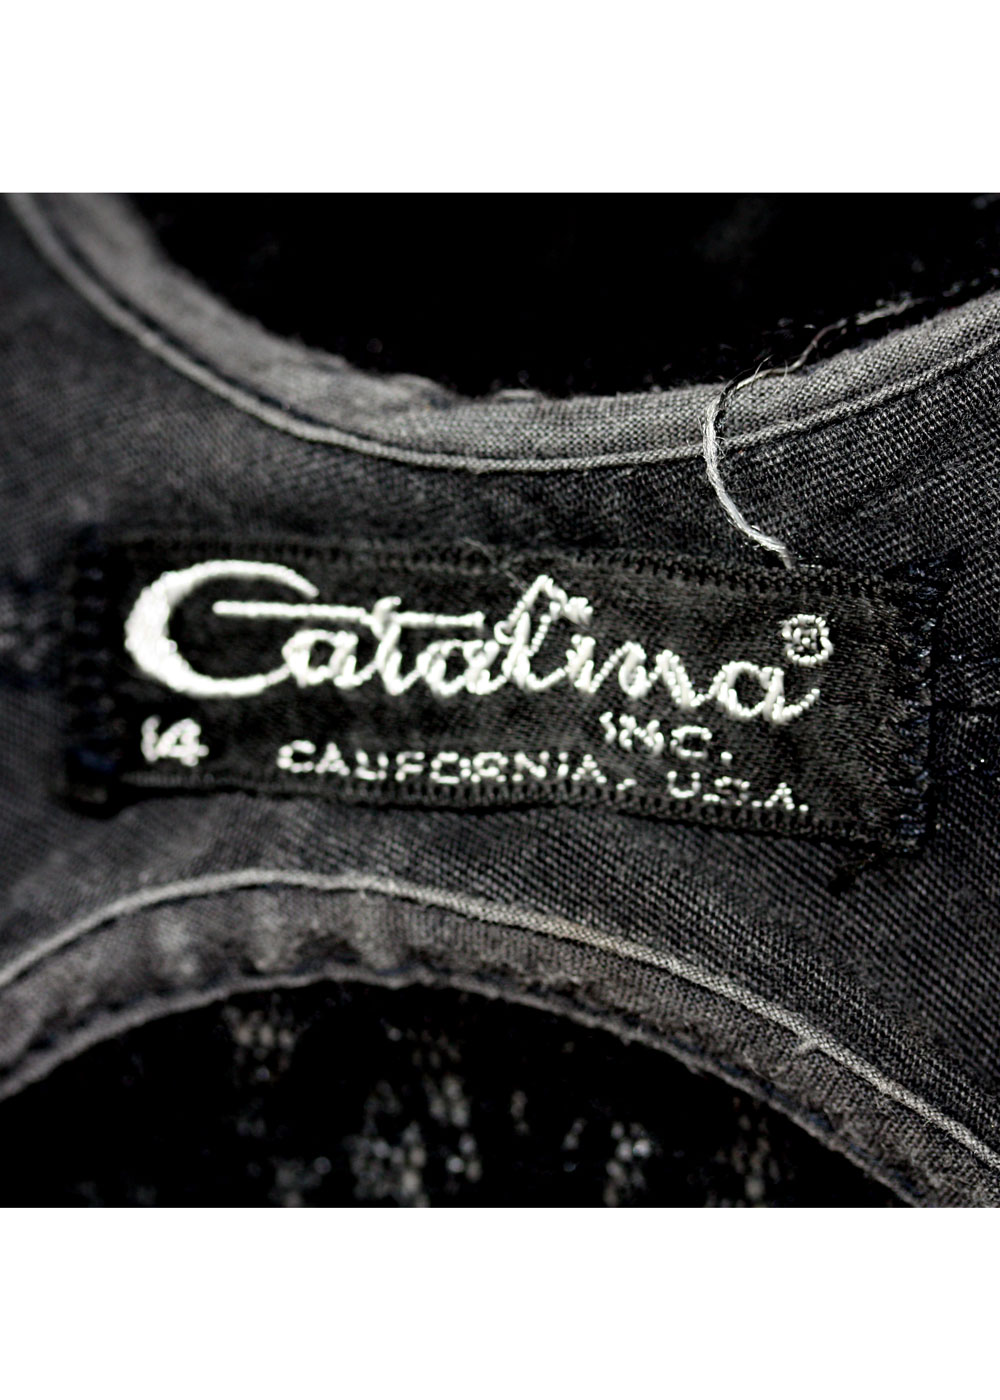 CATALINA Jaquard bathing suit ’60s